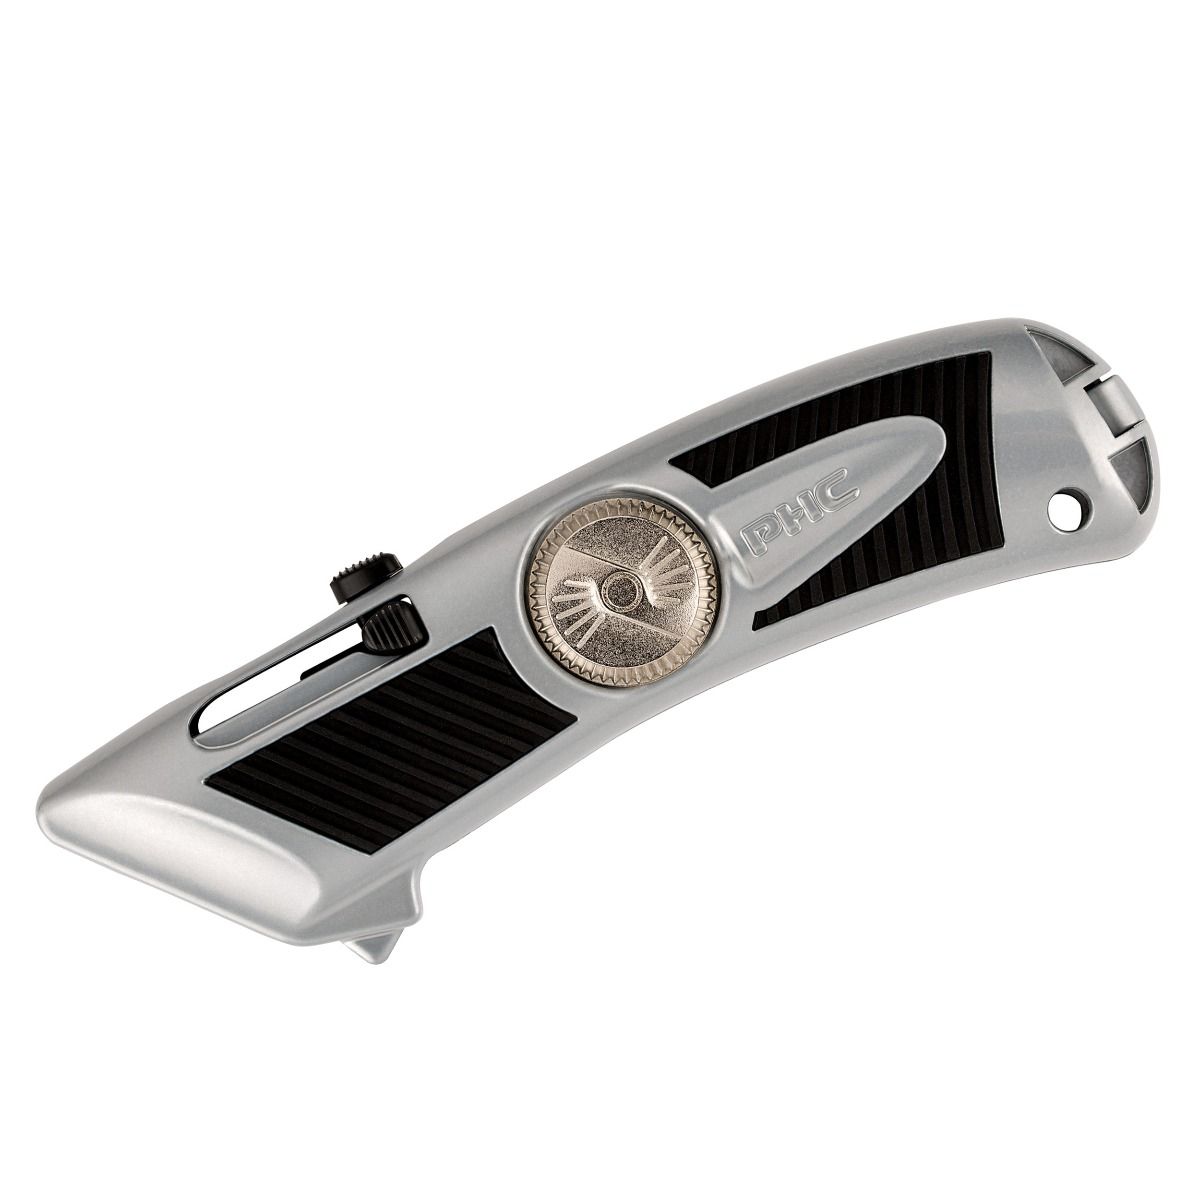 QBAR Smart-Retractable Metal Safety Knife - DaltonSafety